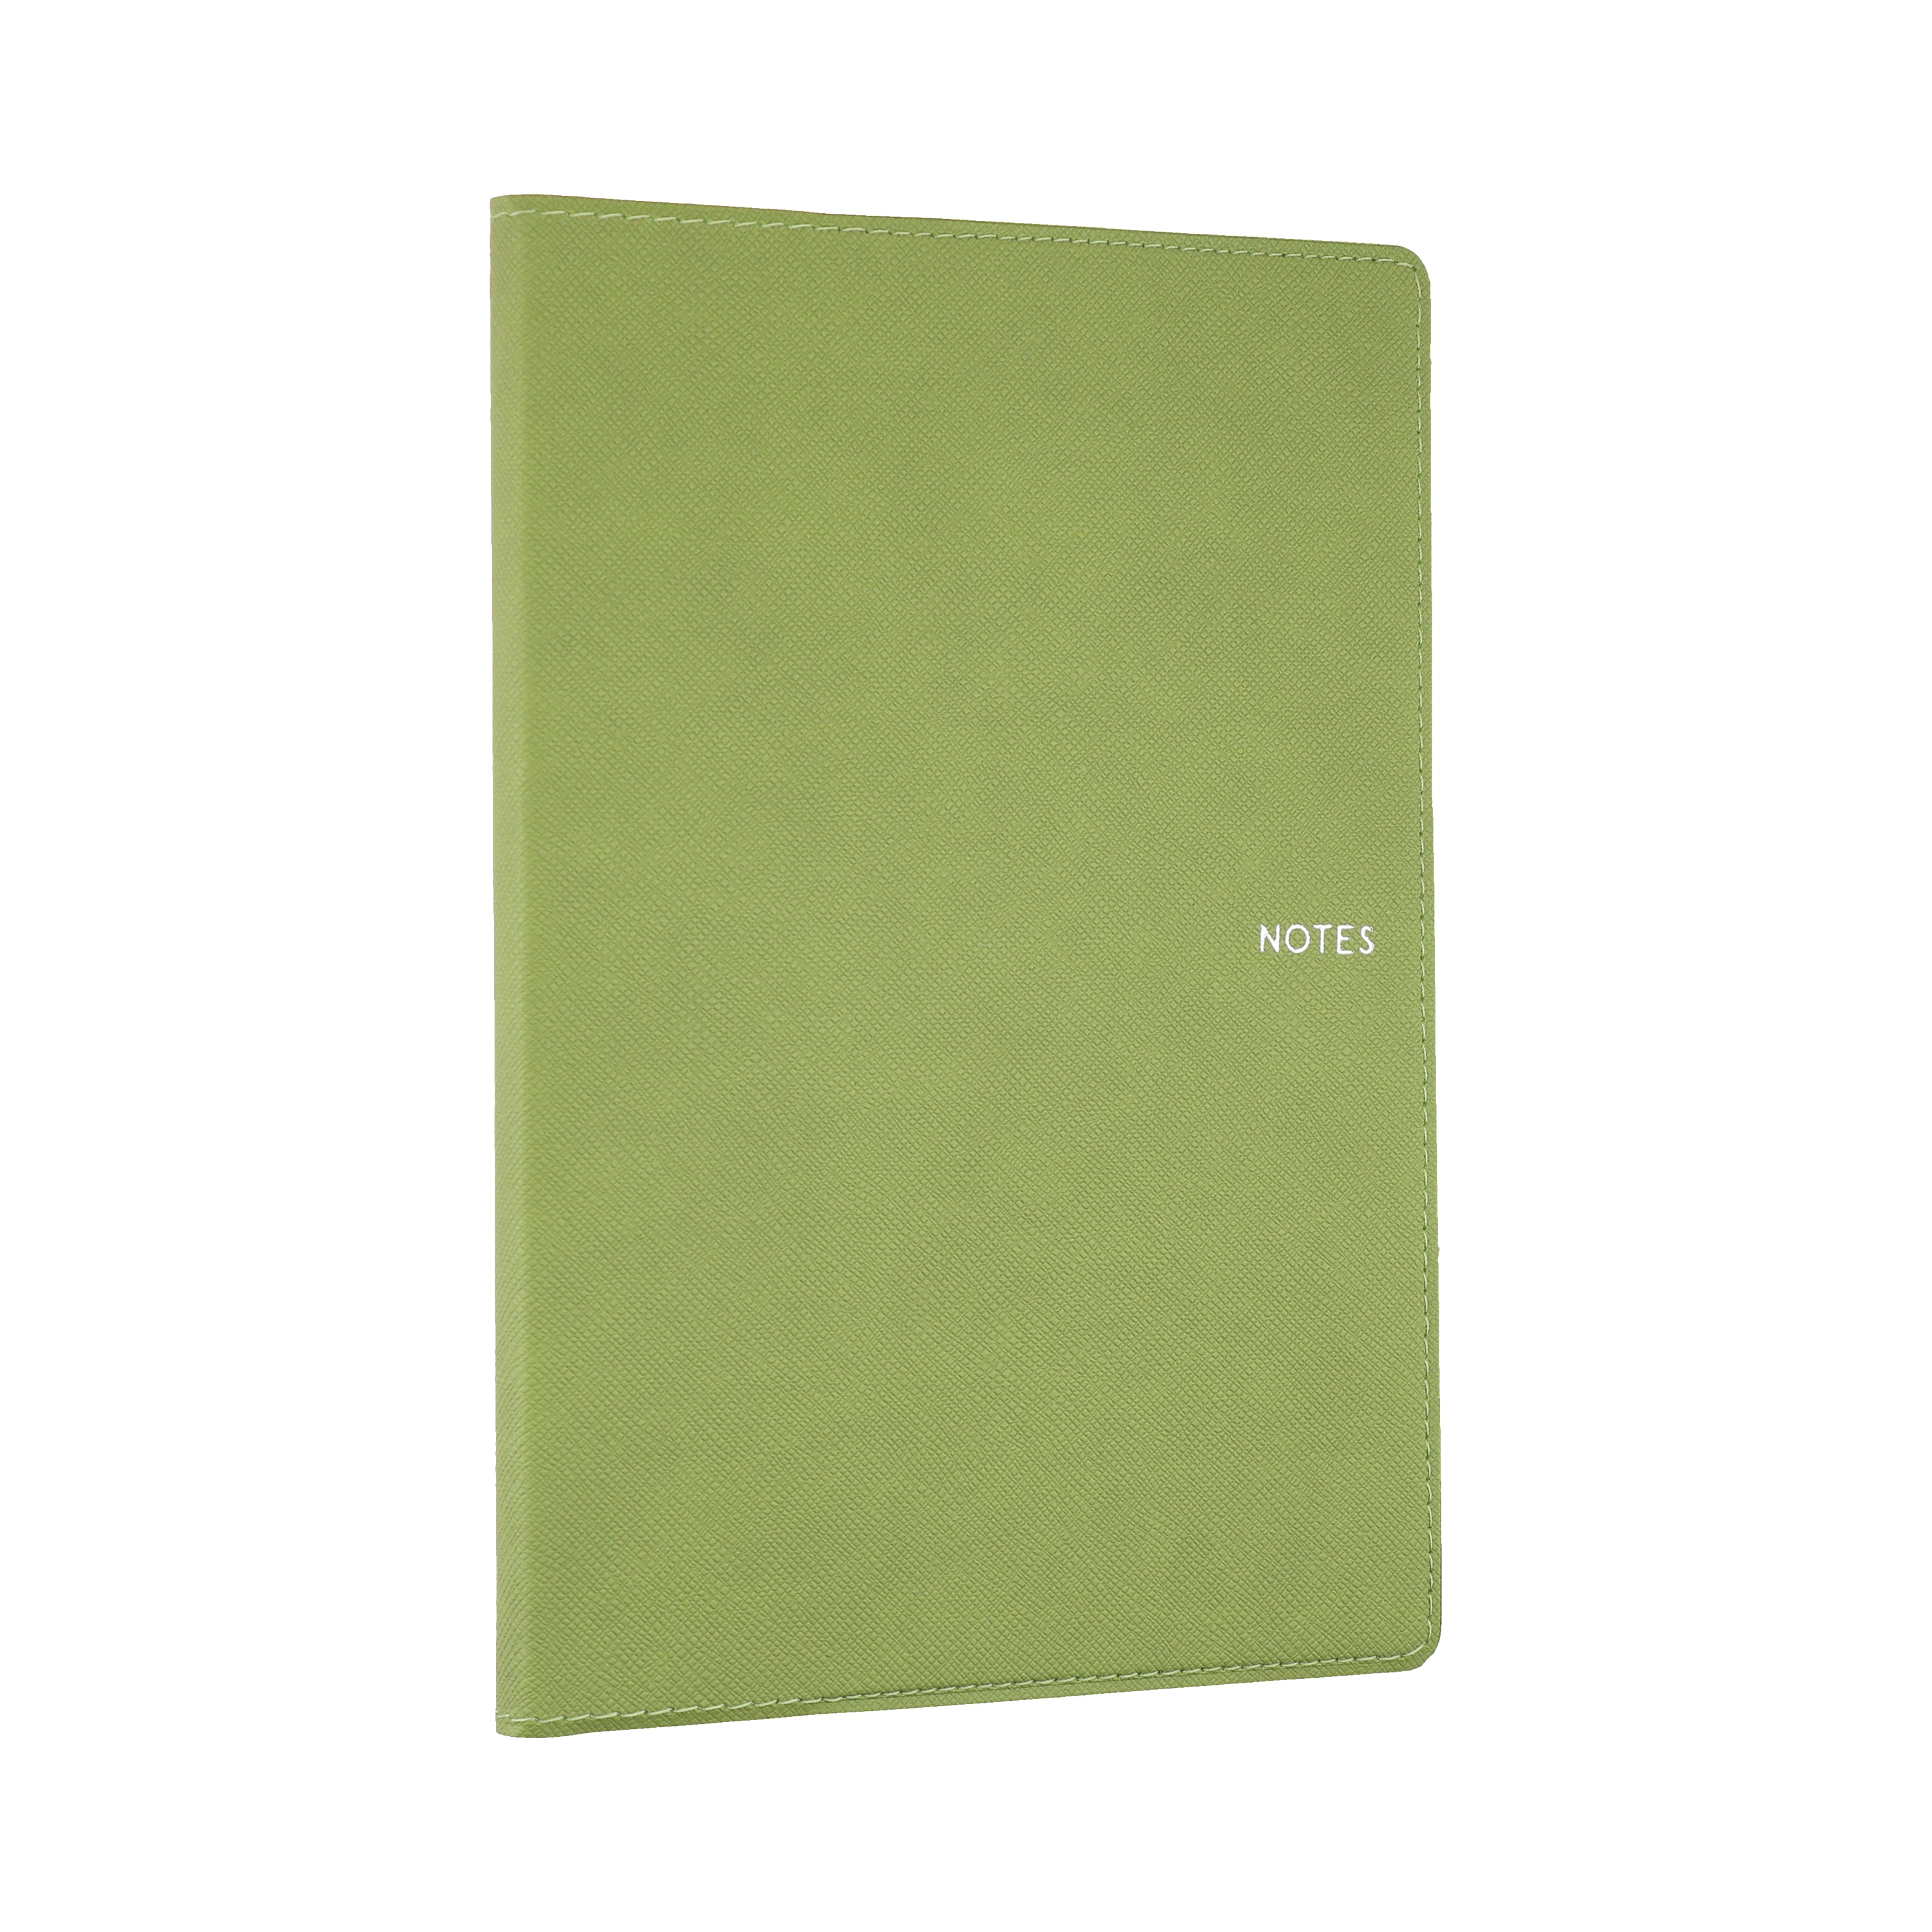 Metropolitan Melbourne Notebook - A5 - Ruled Green